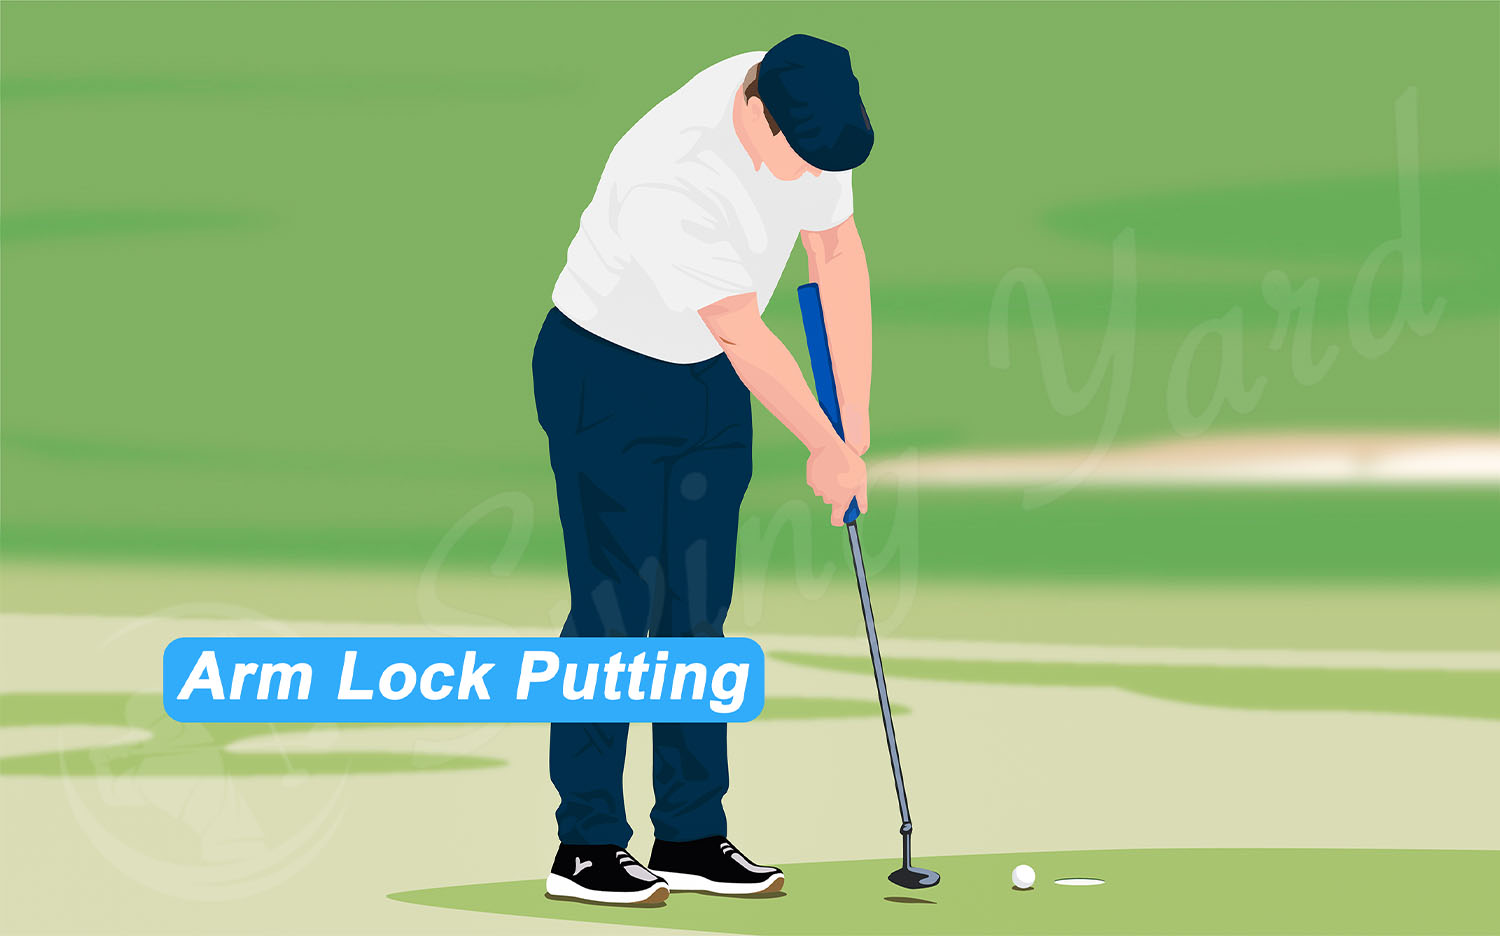 Golfer using the arm lock putting technique